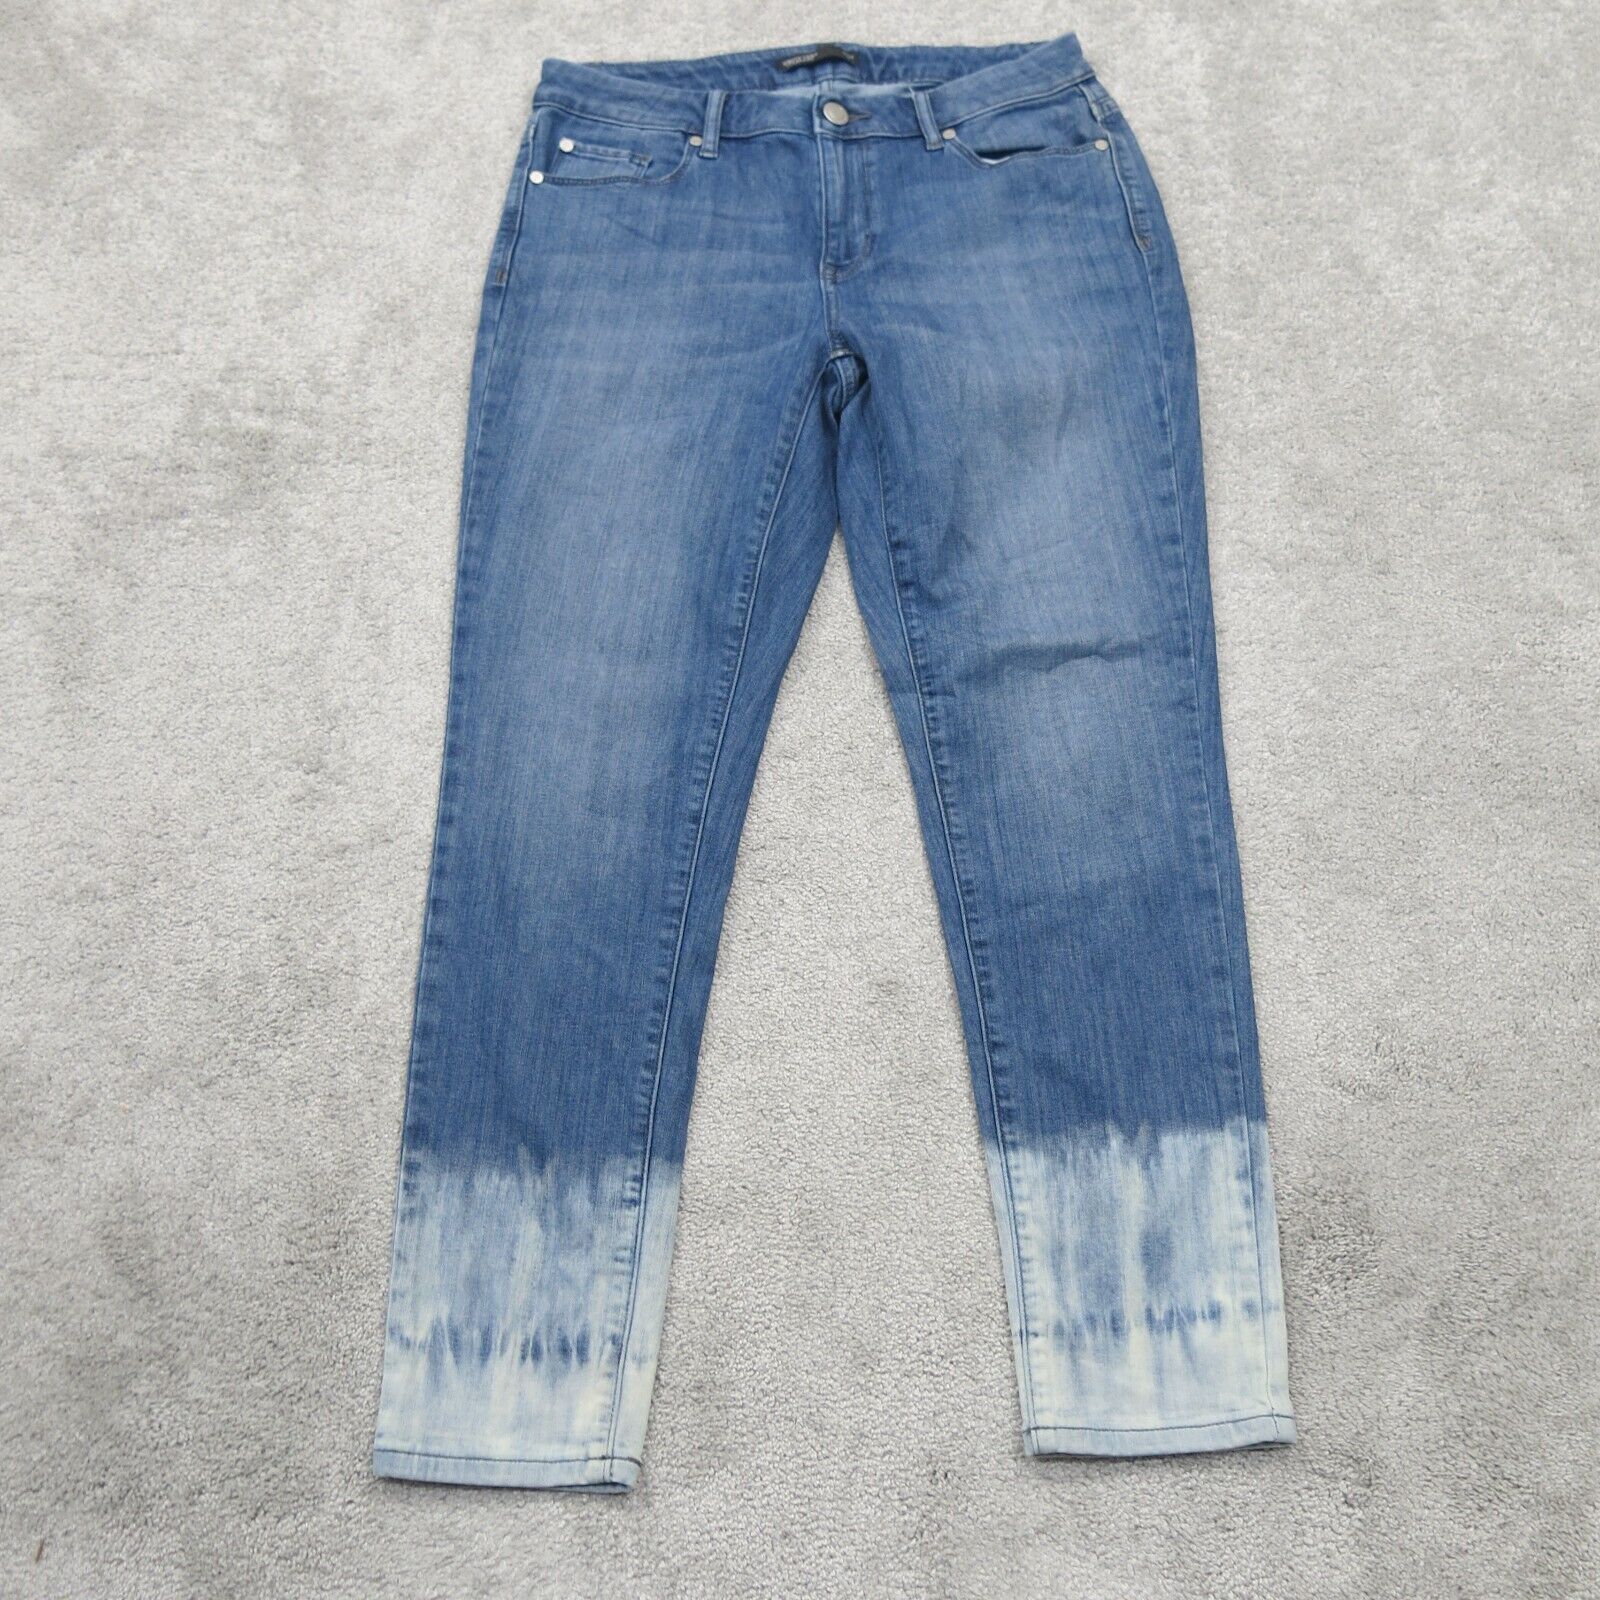 Simply Vera Vera Wang Skinny Denim Blue Jeans Mid-Rise Size 12 Reg Stretch